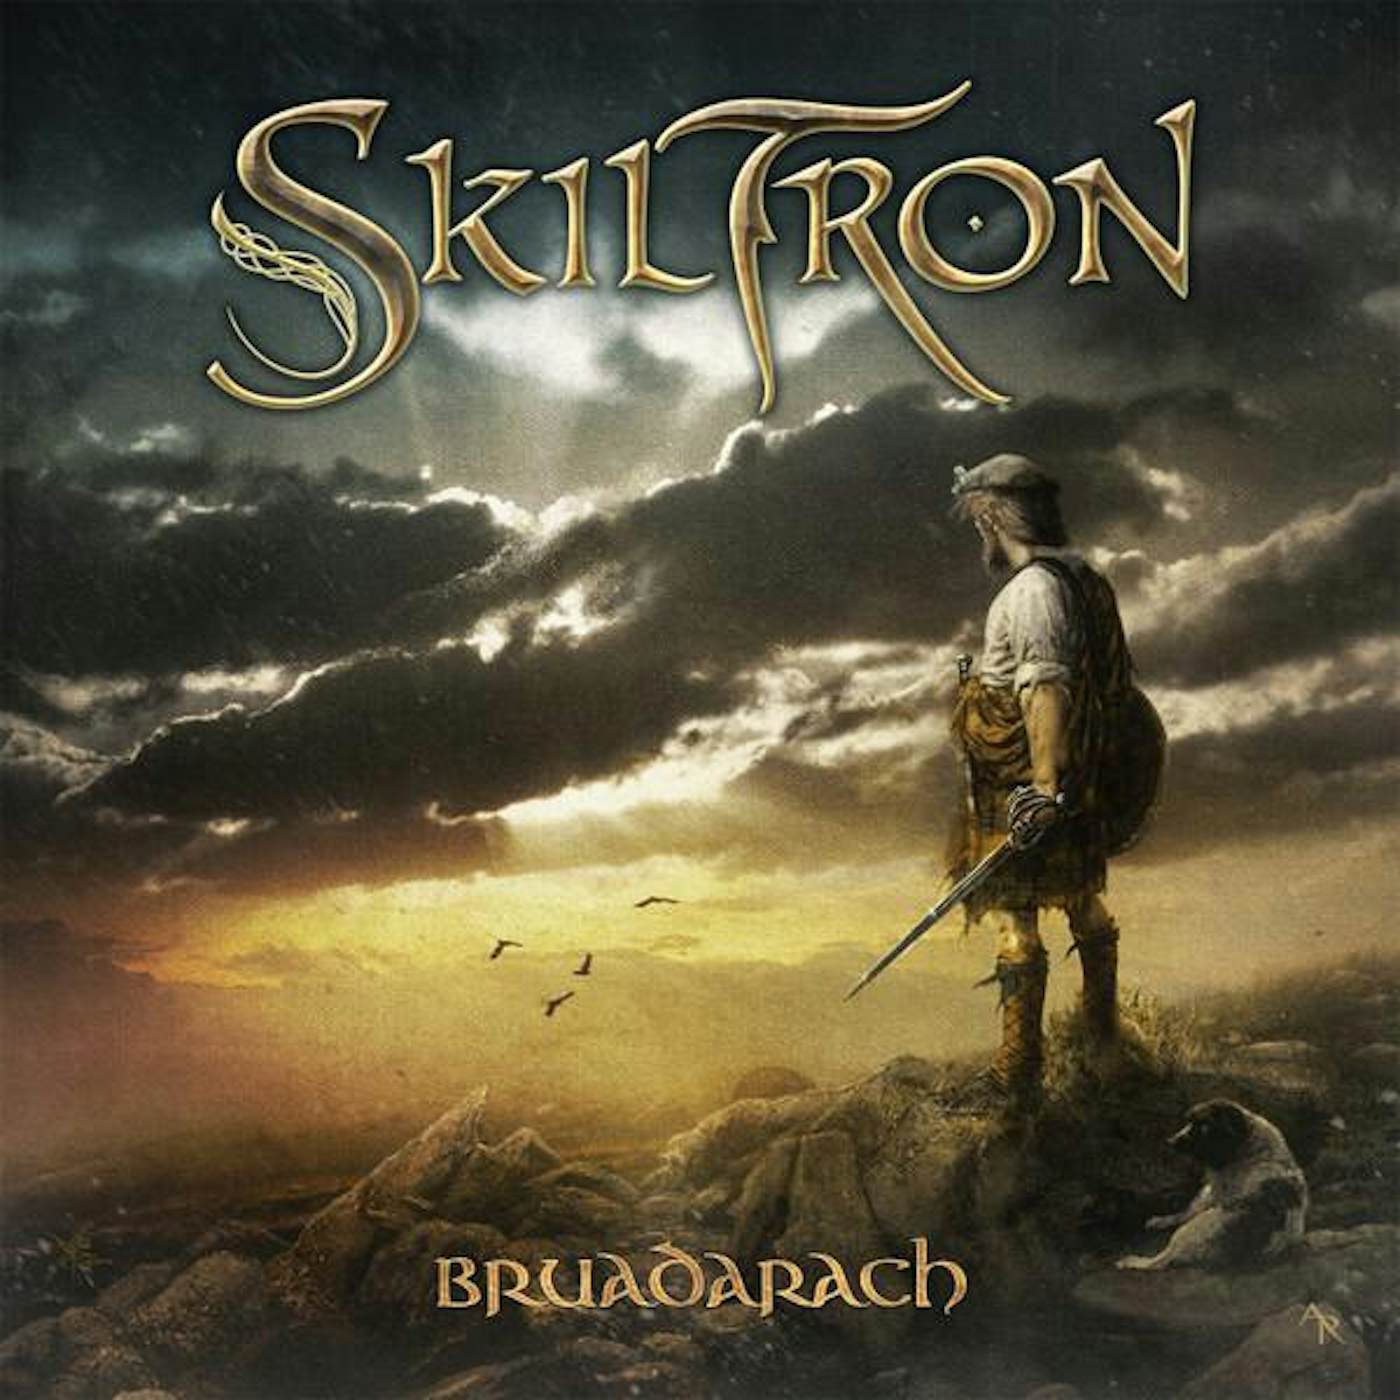 Skiltron BRUADARACH CD